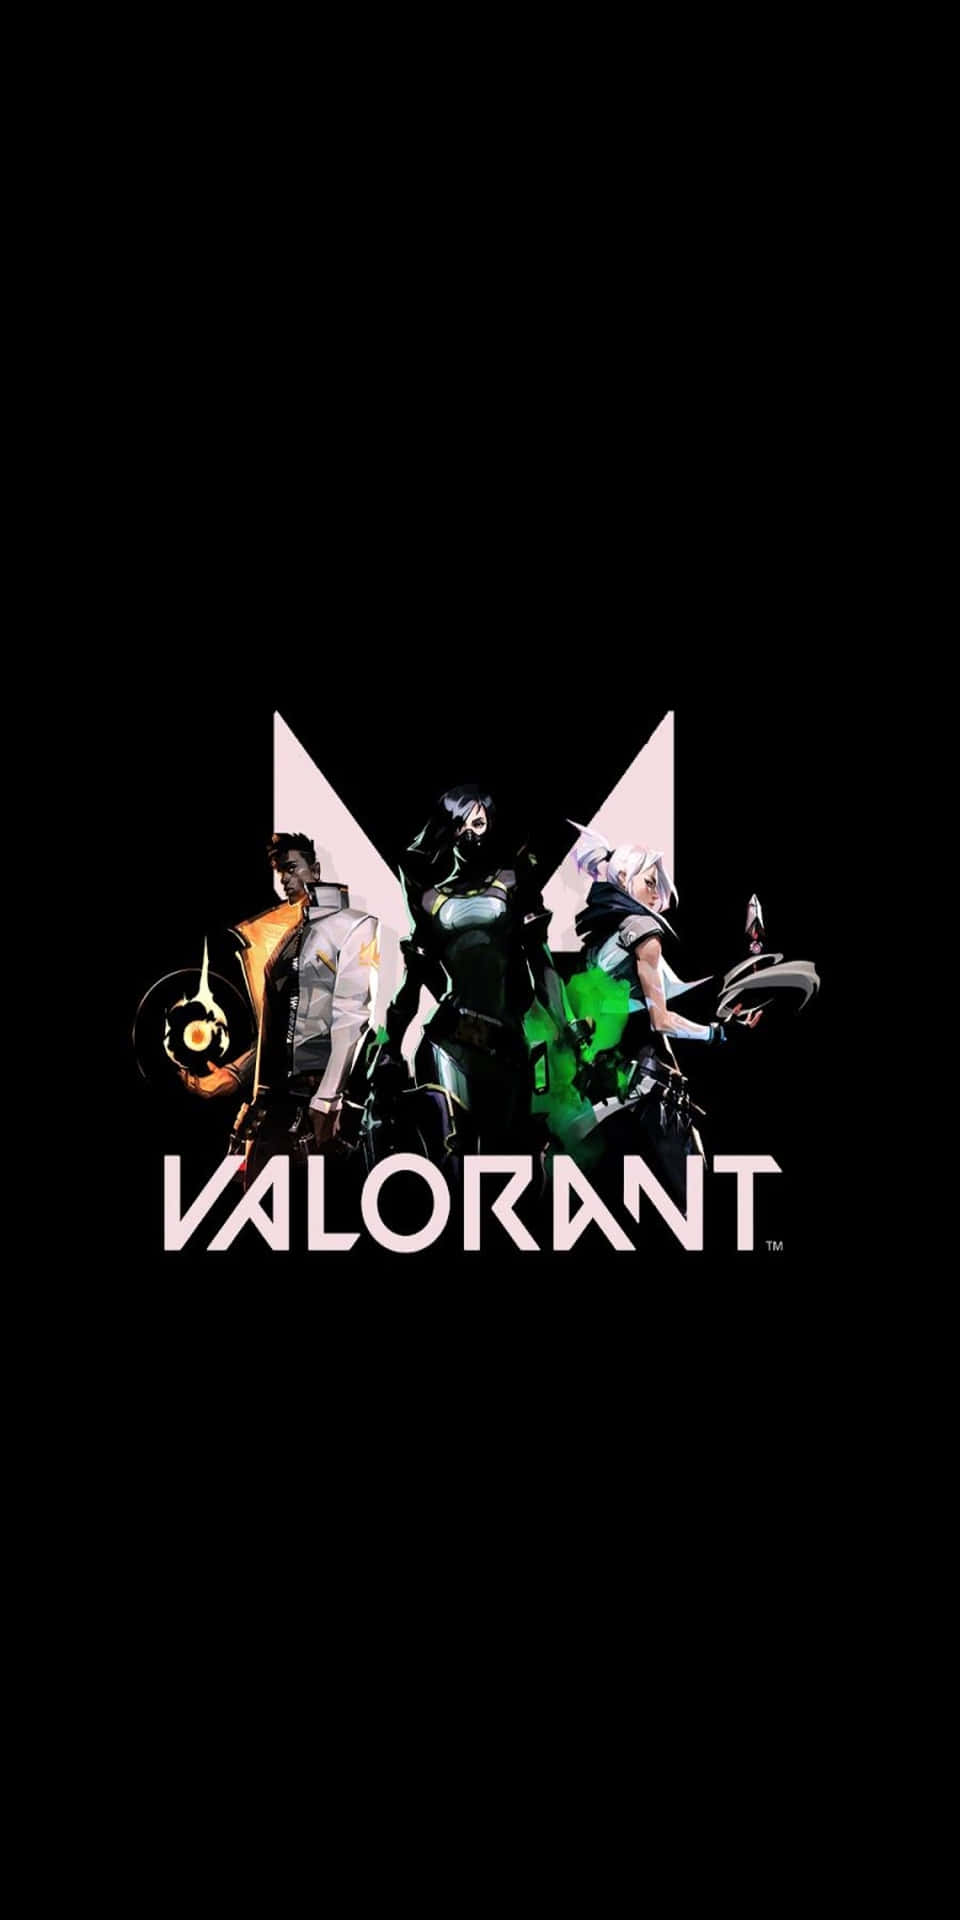 Valorant Logo On A Black Background